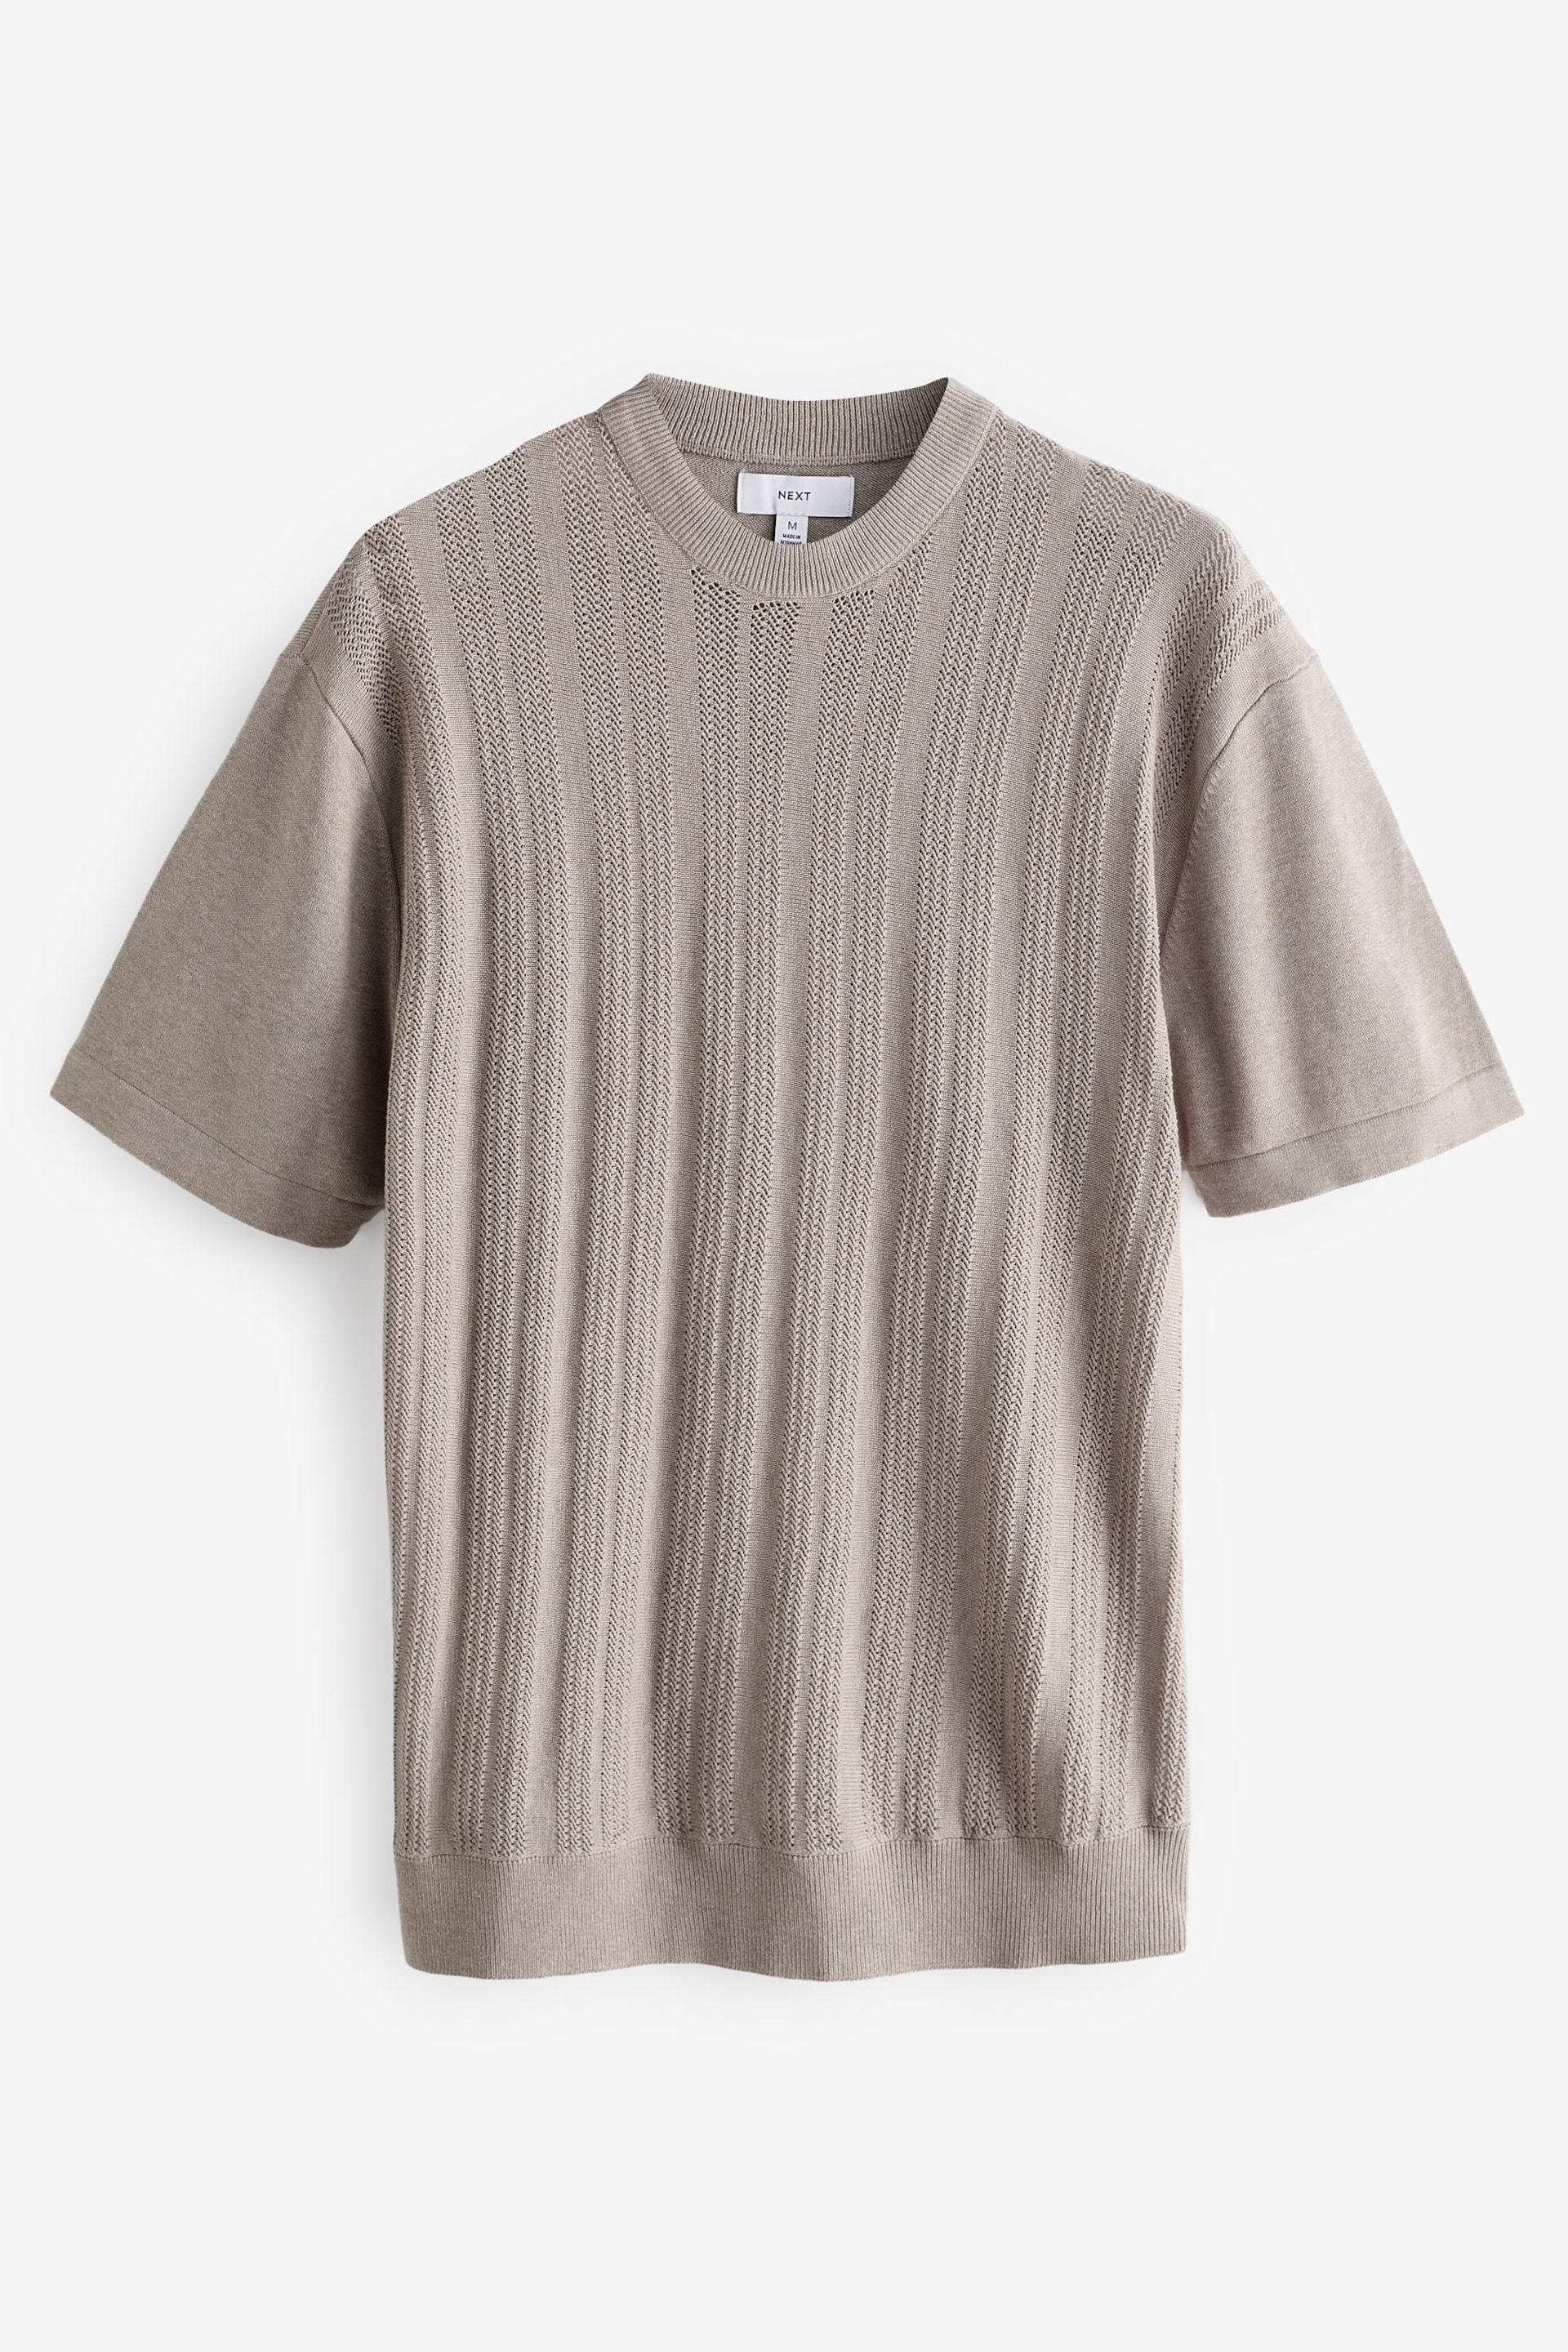 Dark Stone Regular Vertical Pointelle Knitted Polo Shirt - Image 3 of 5